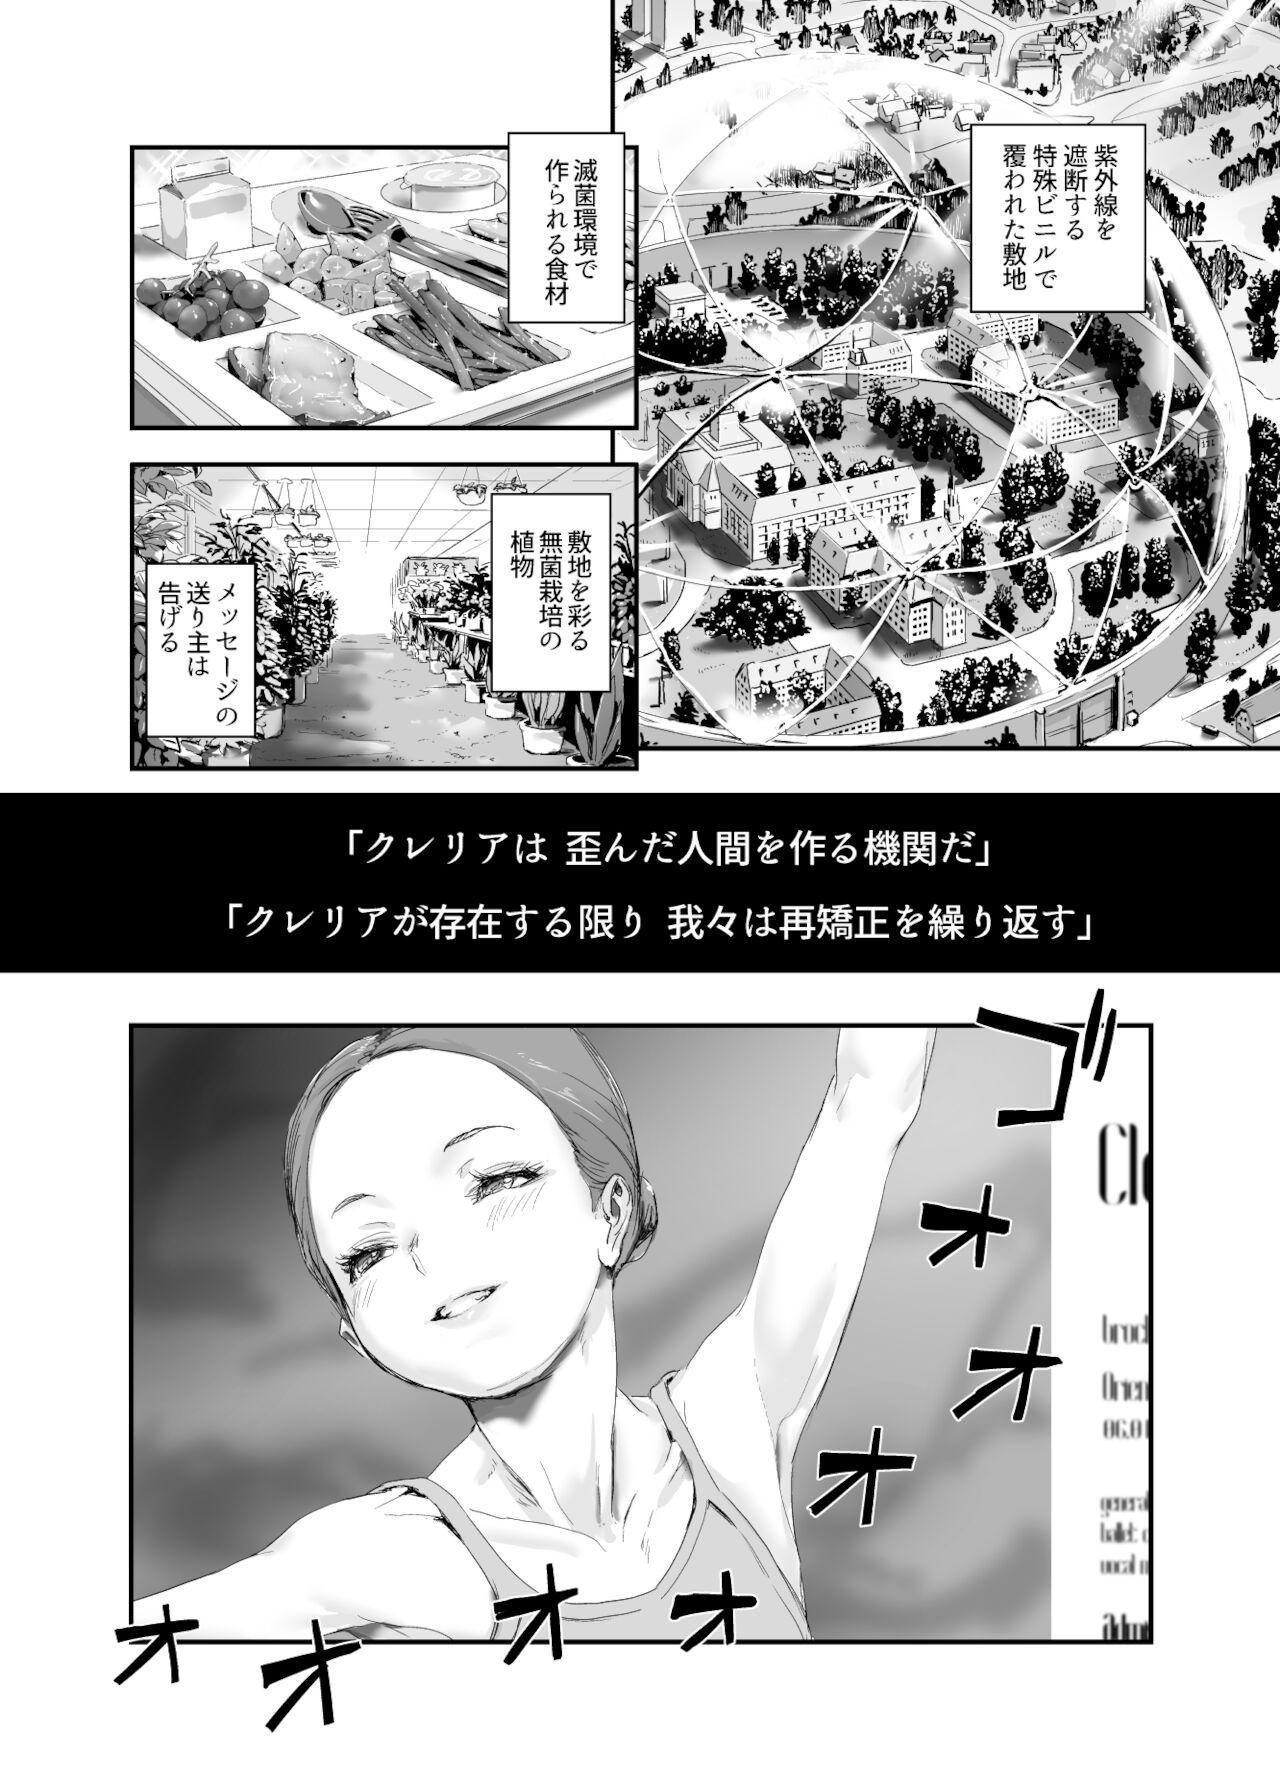 Safadinha Shoujo Osen 2 Spooning - Page 2